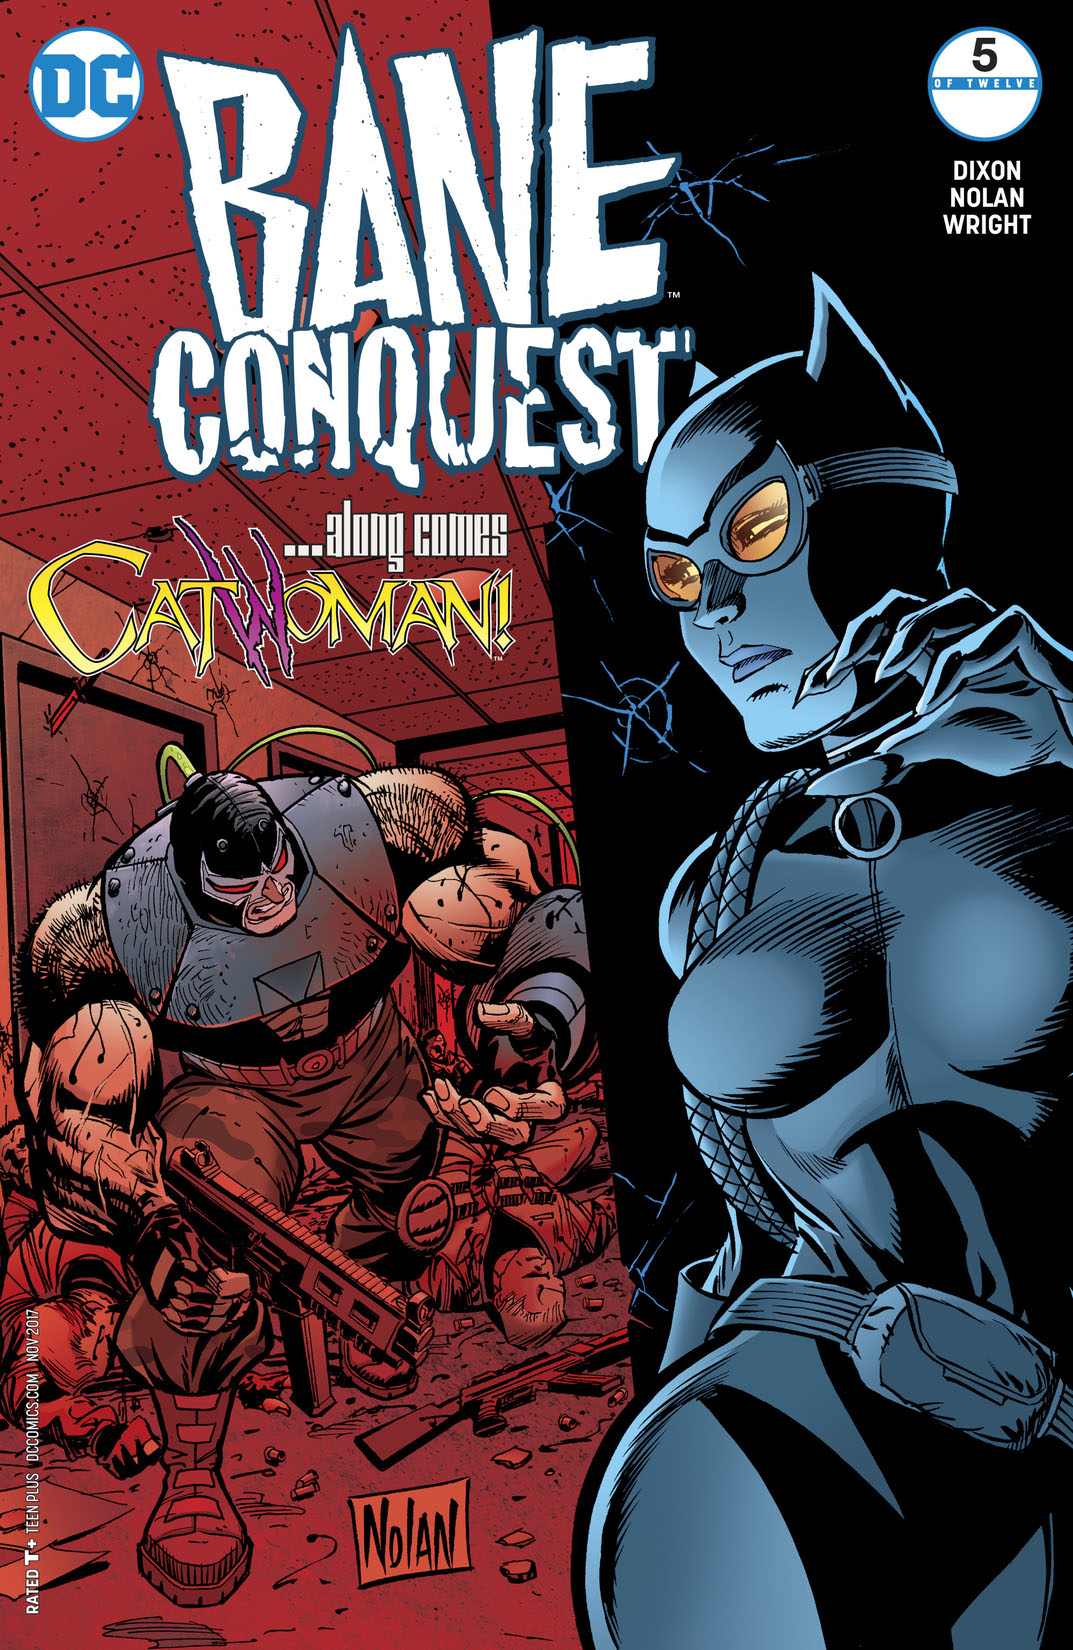 Bane: Conquest #5 preview images